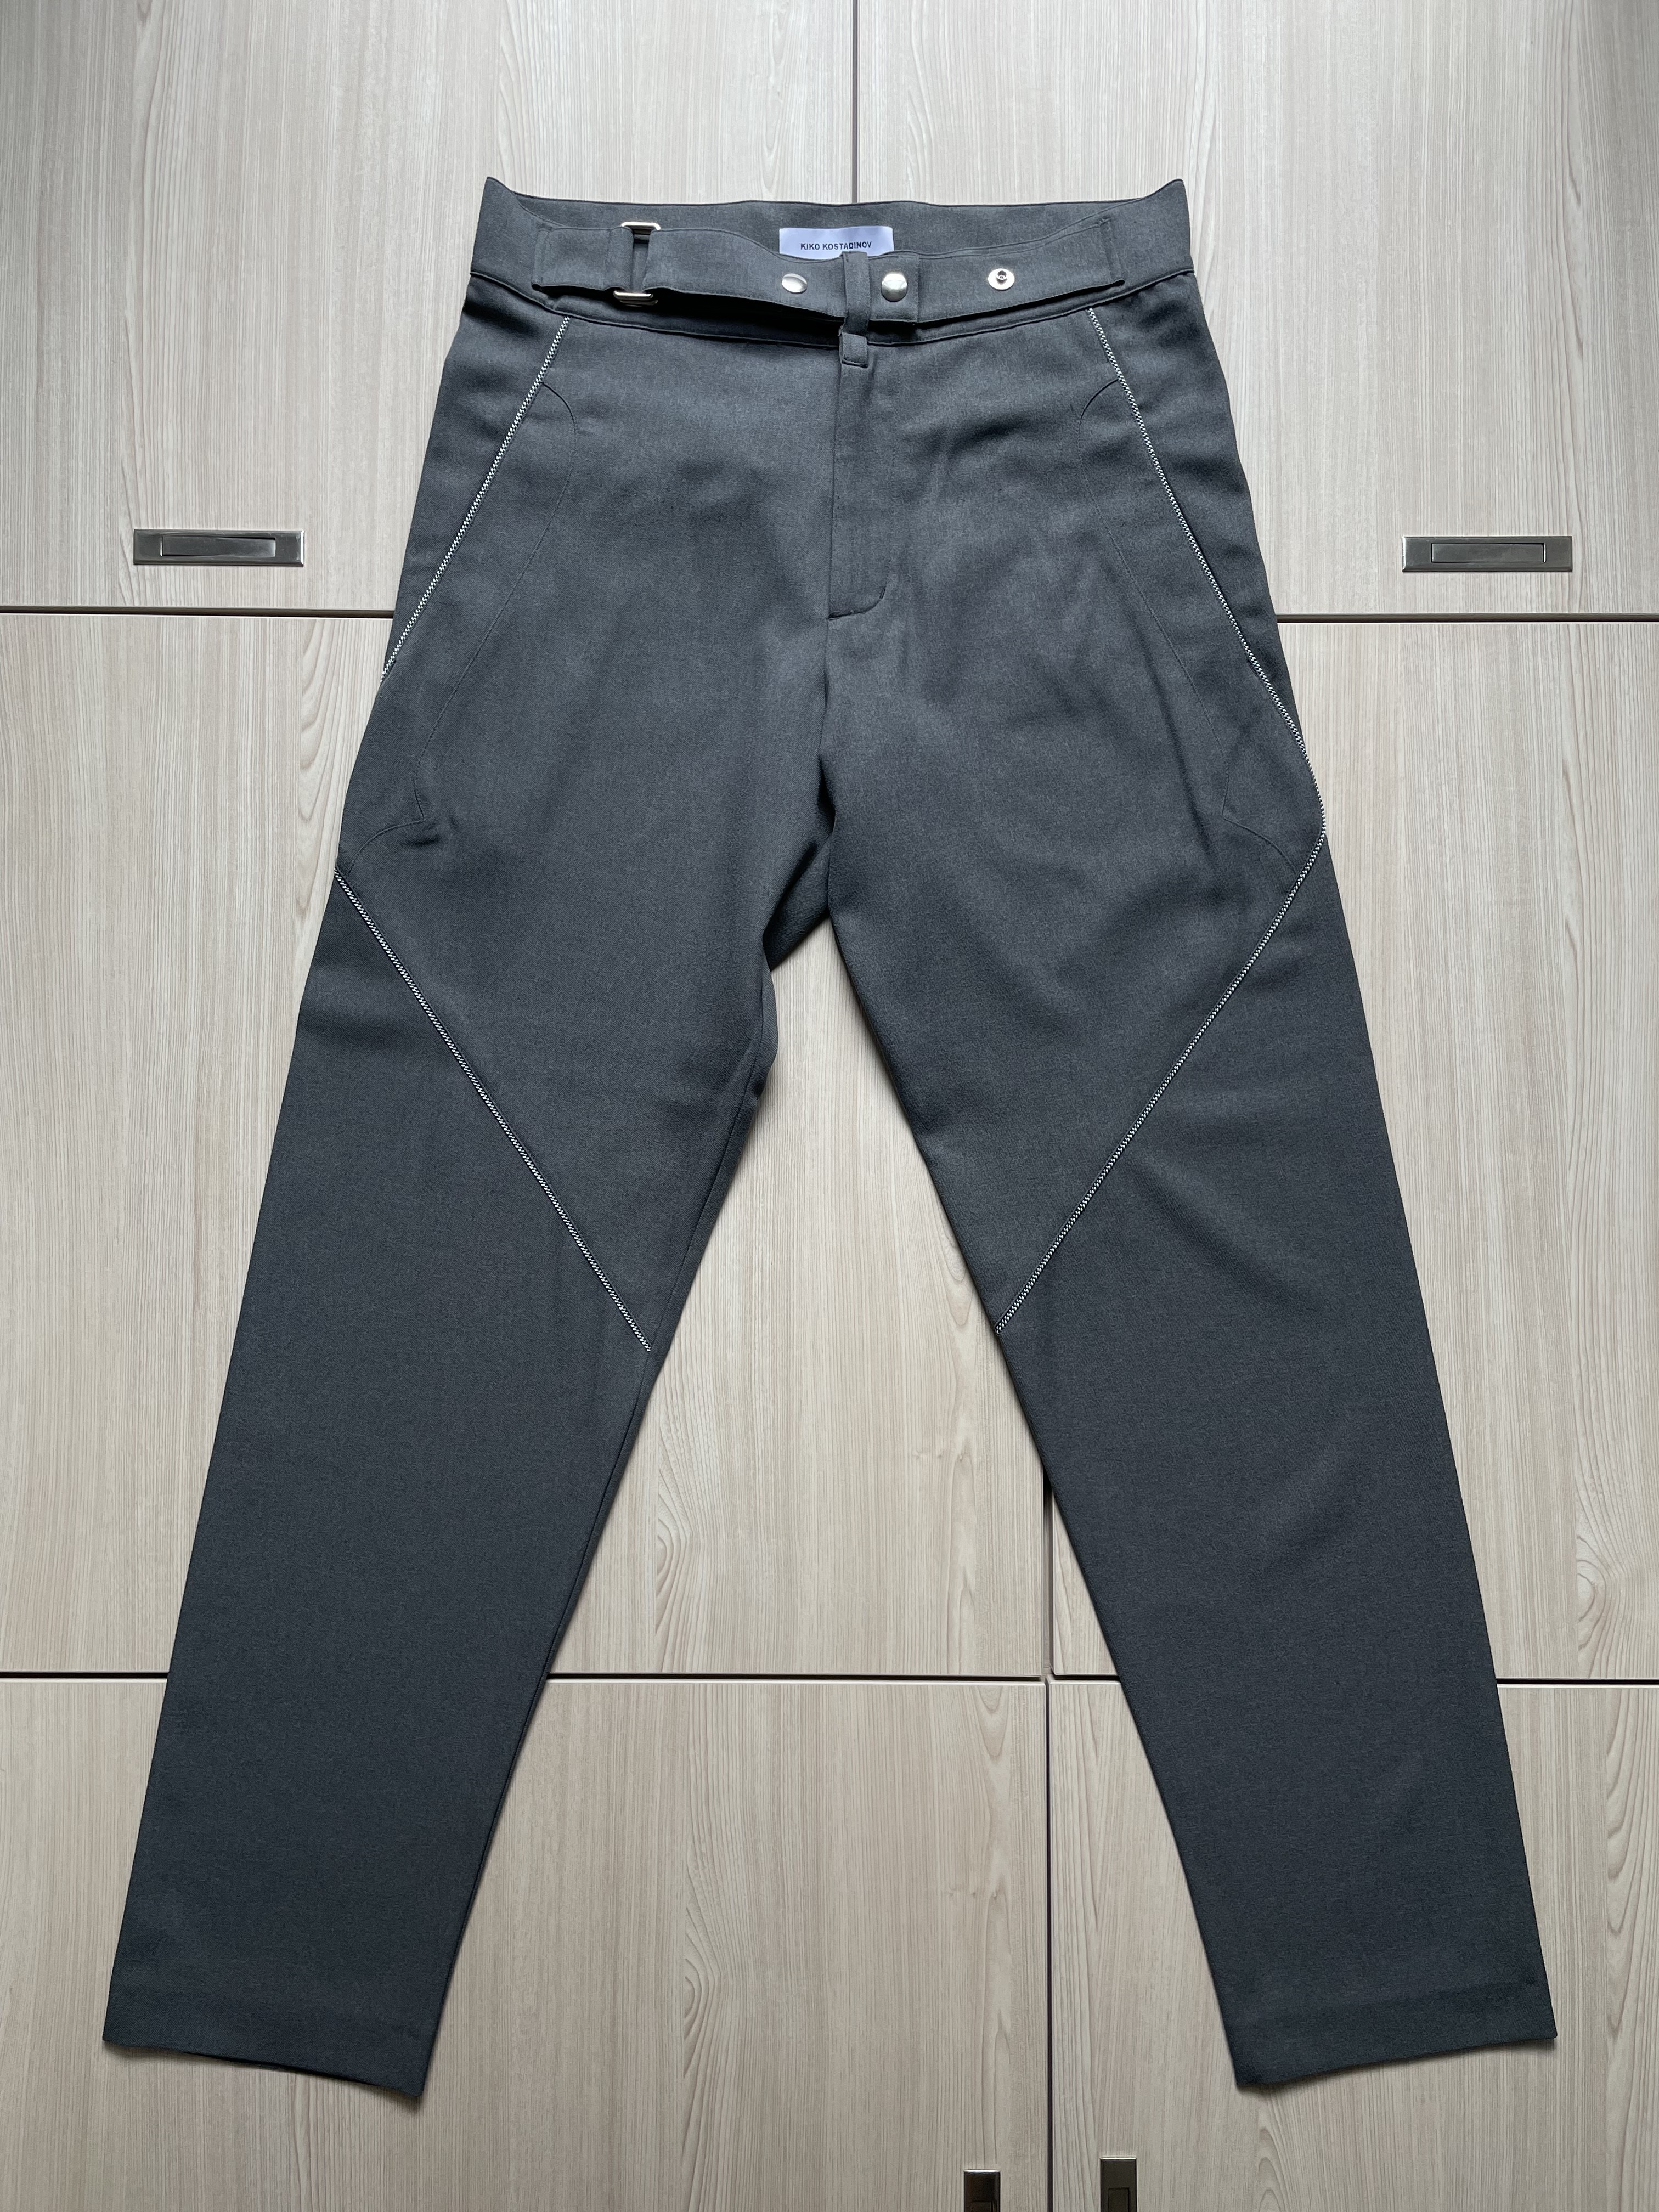 00072019 FW19 Rex Trousers - 1